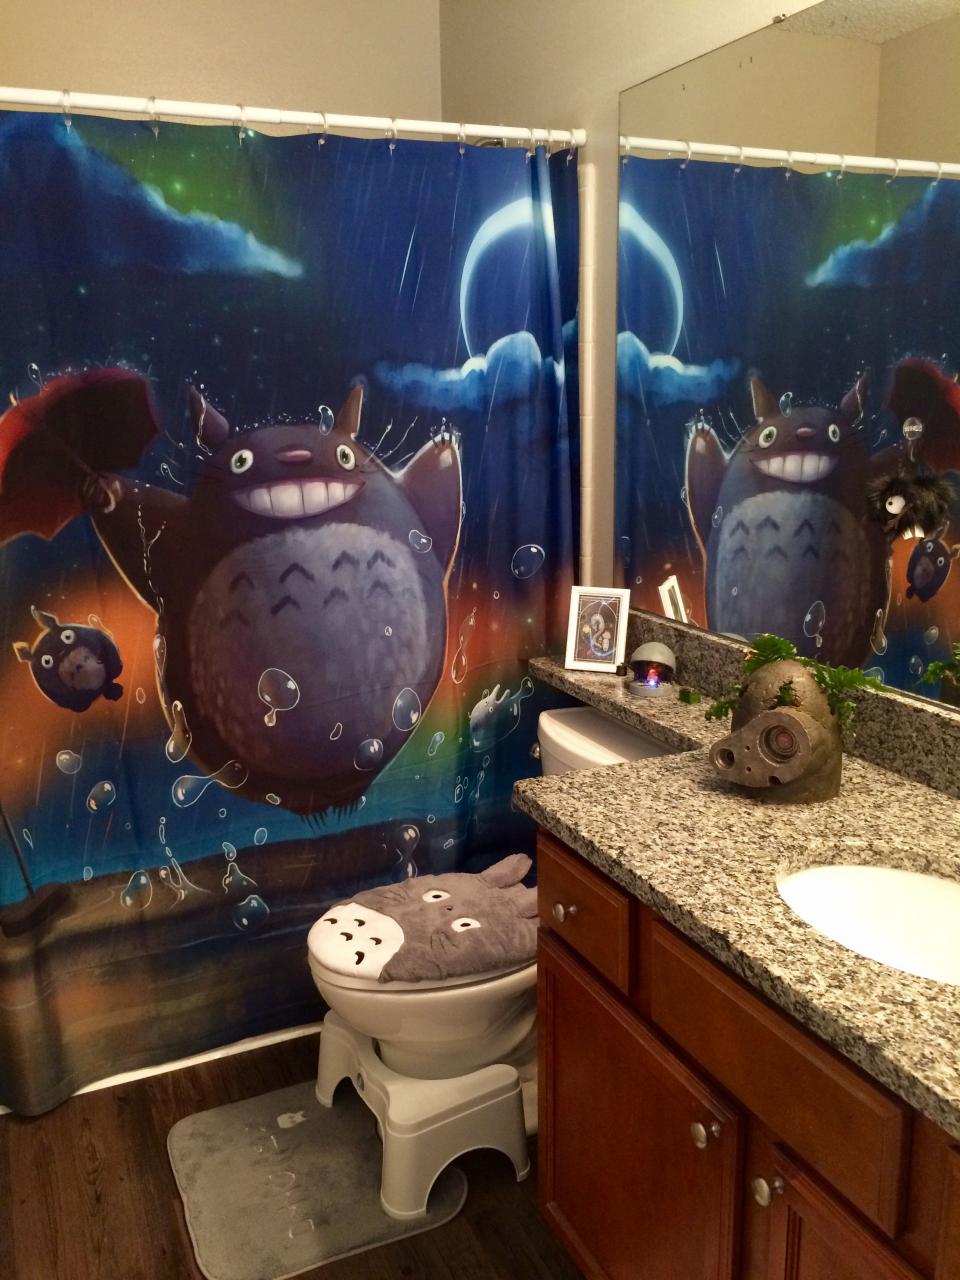 Studio Ghiblithemed bathroom. Studio Ghiblithemed nursery. Kid